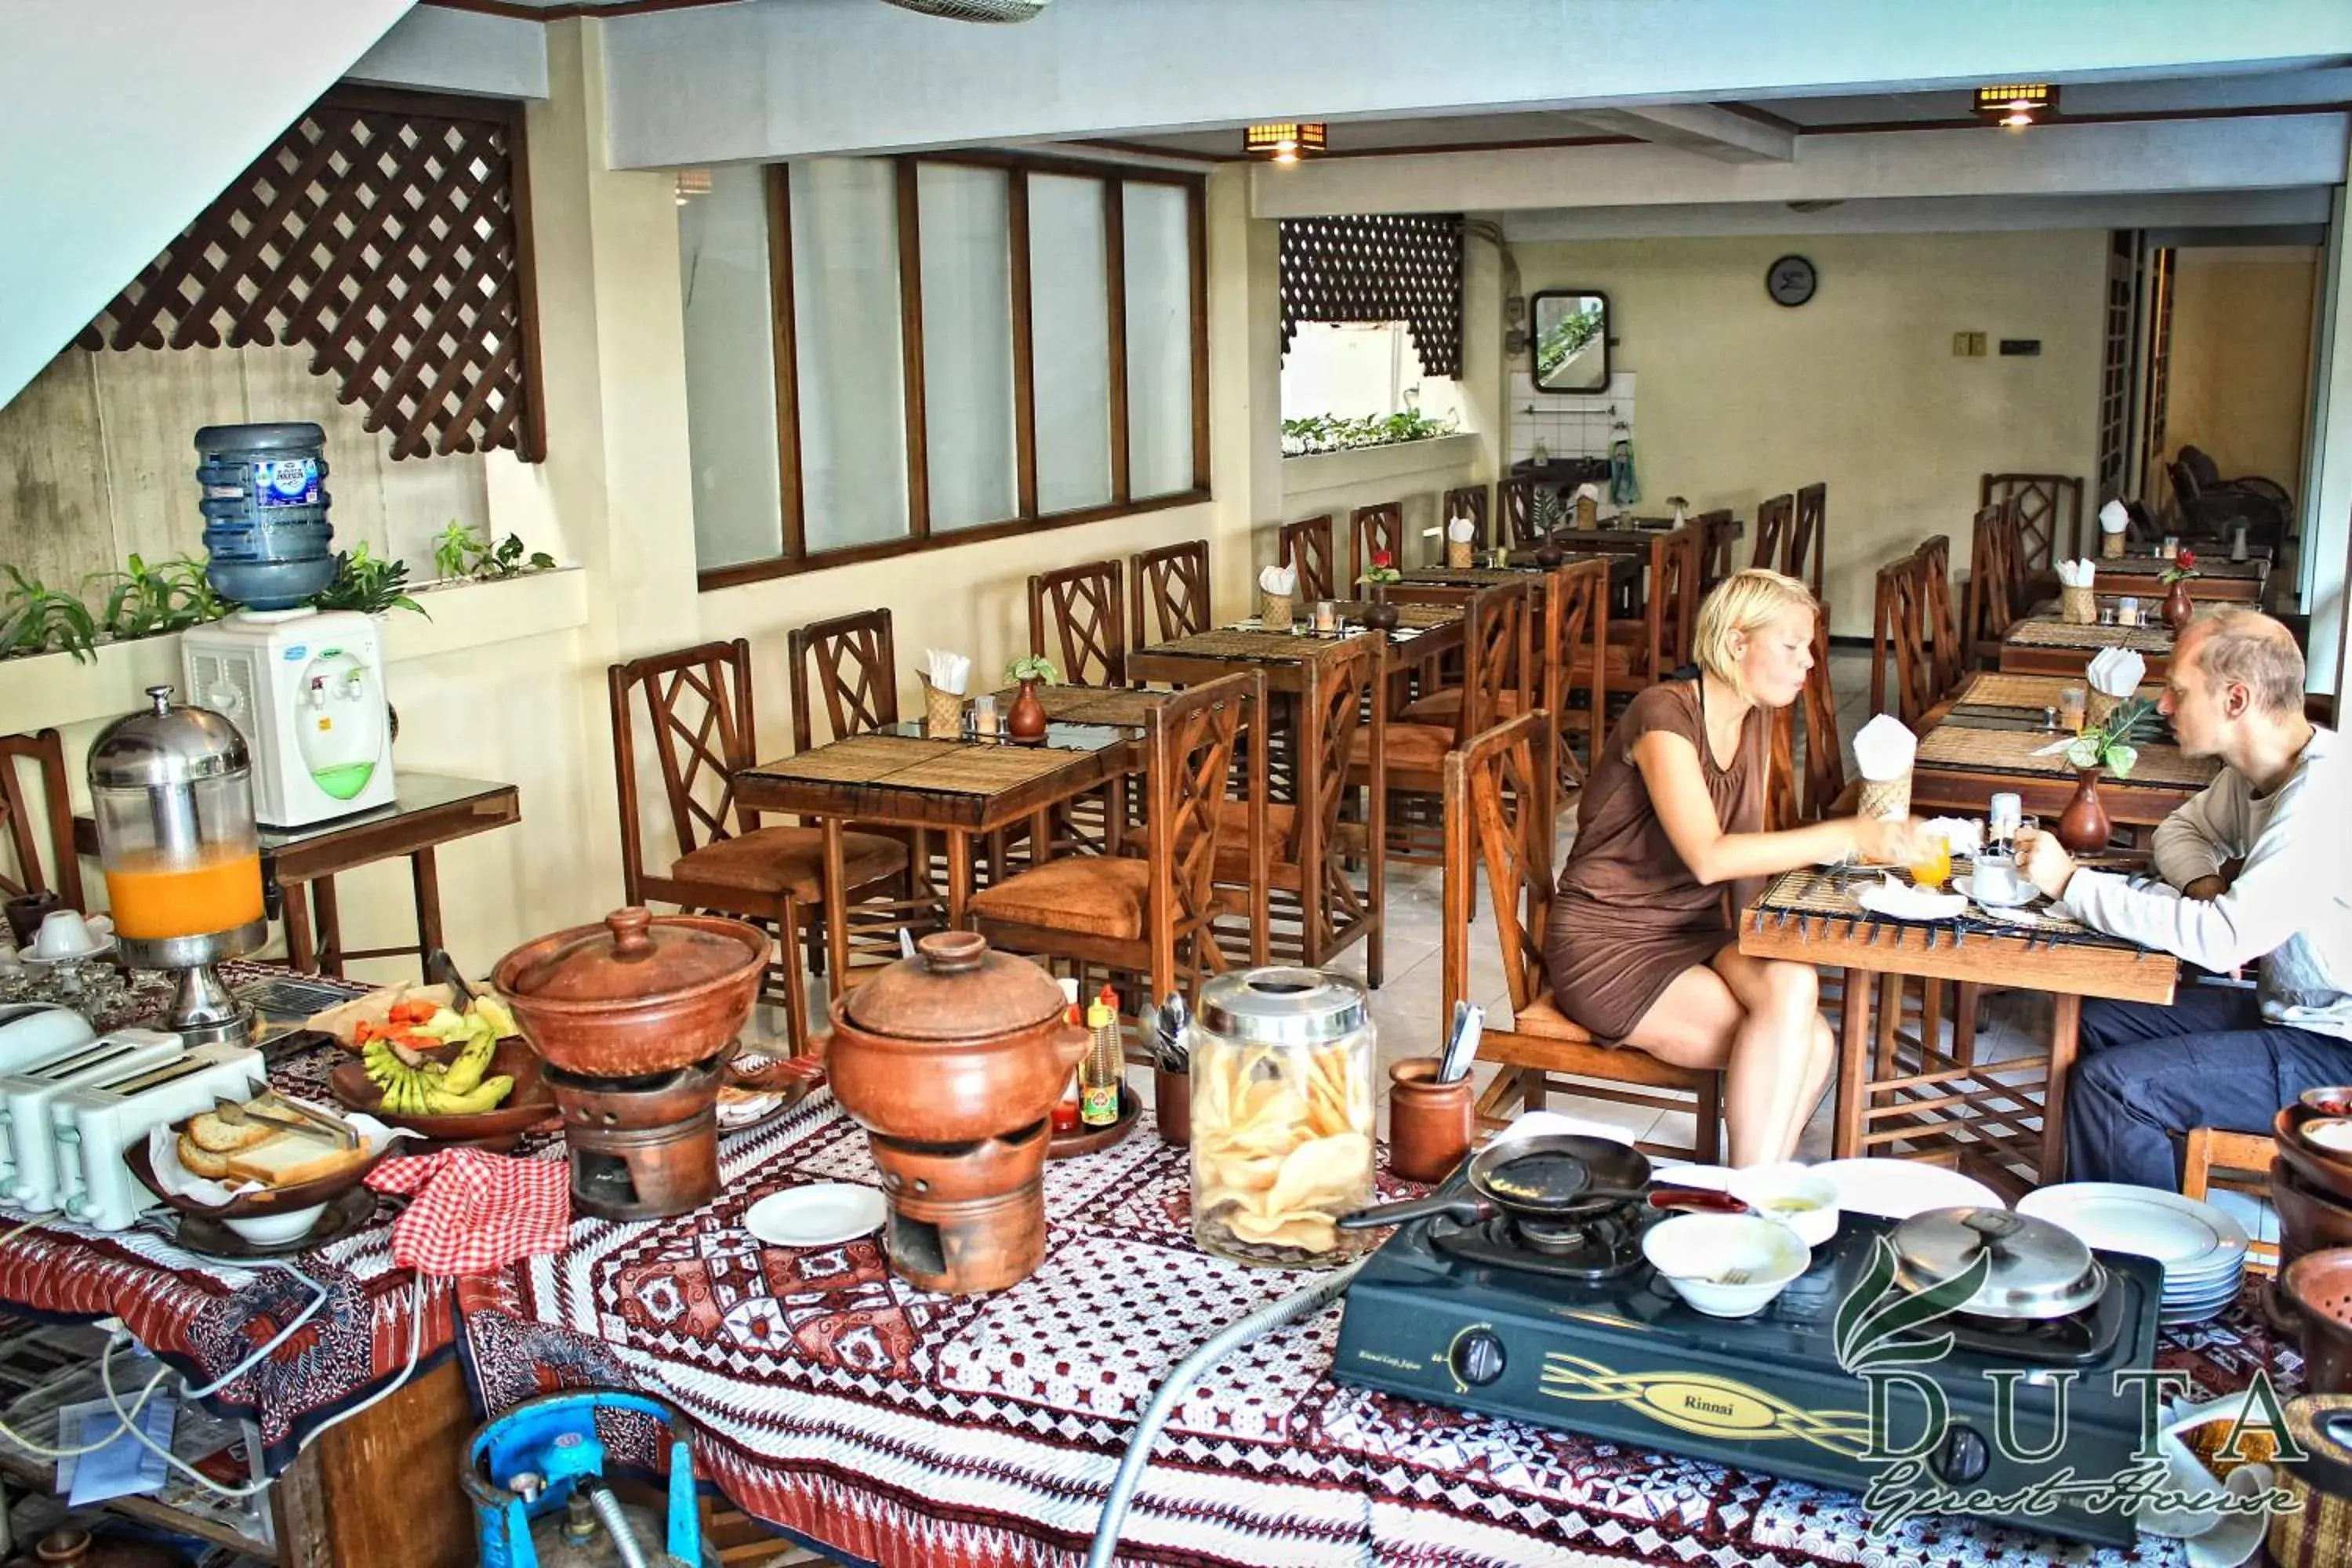 Staff in Duta Guest House